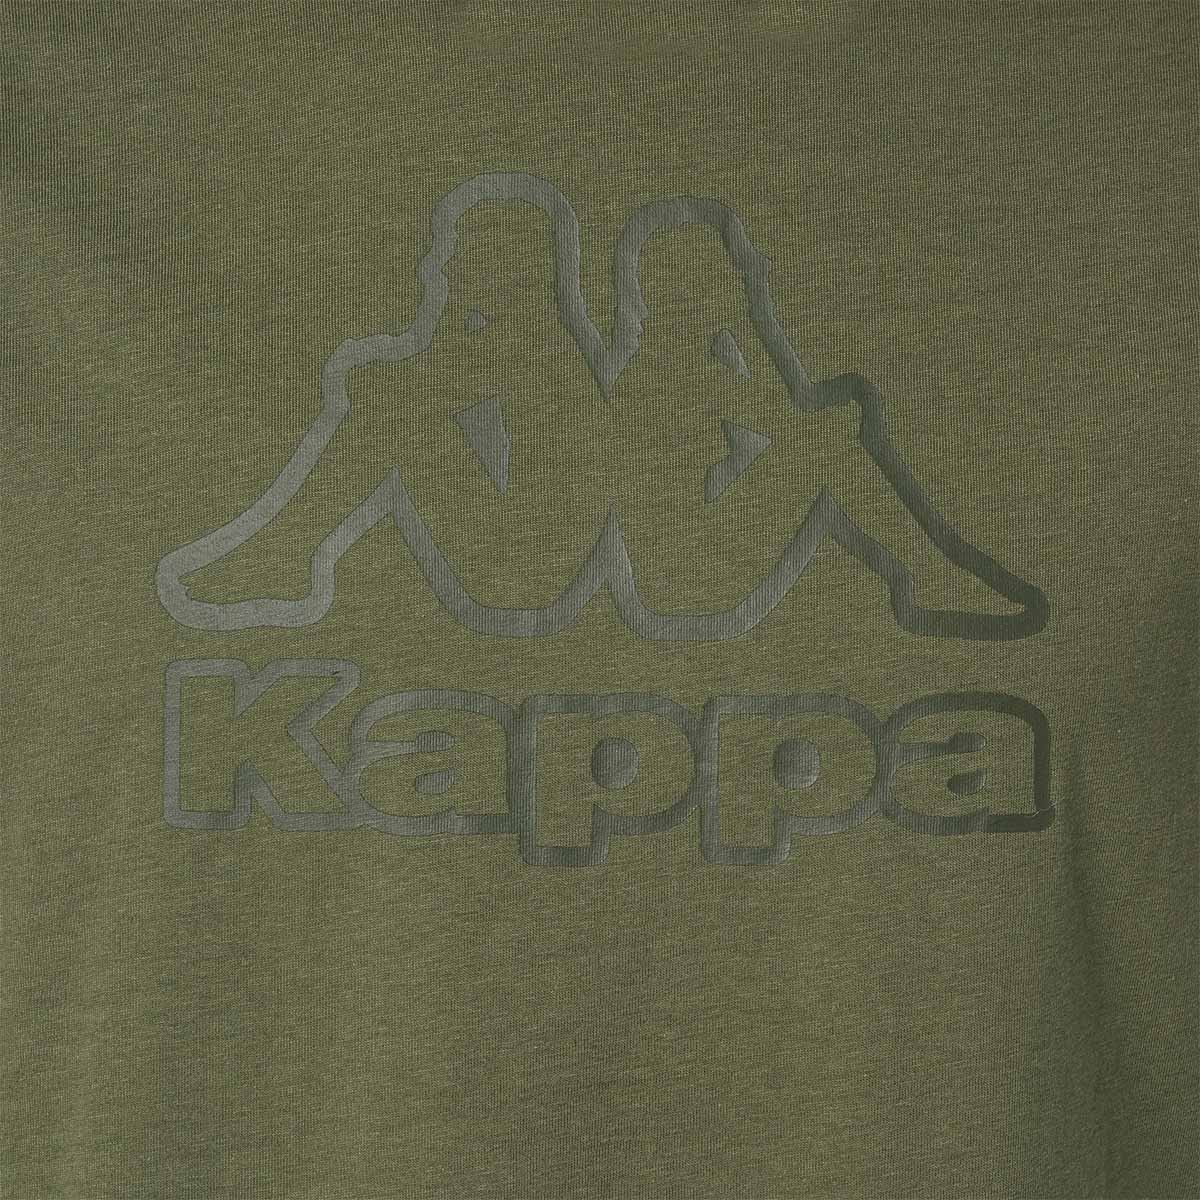 Camiseta Kappa Cremy